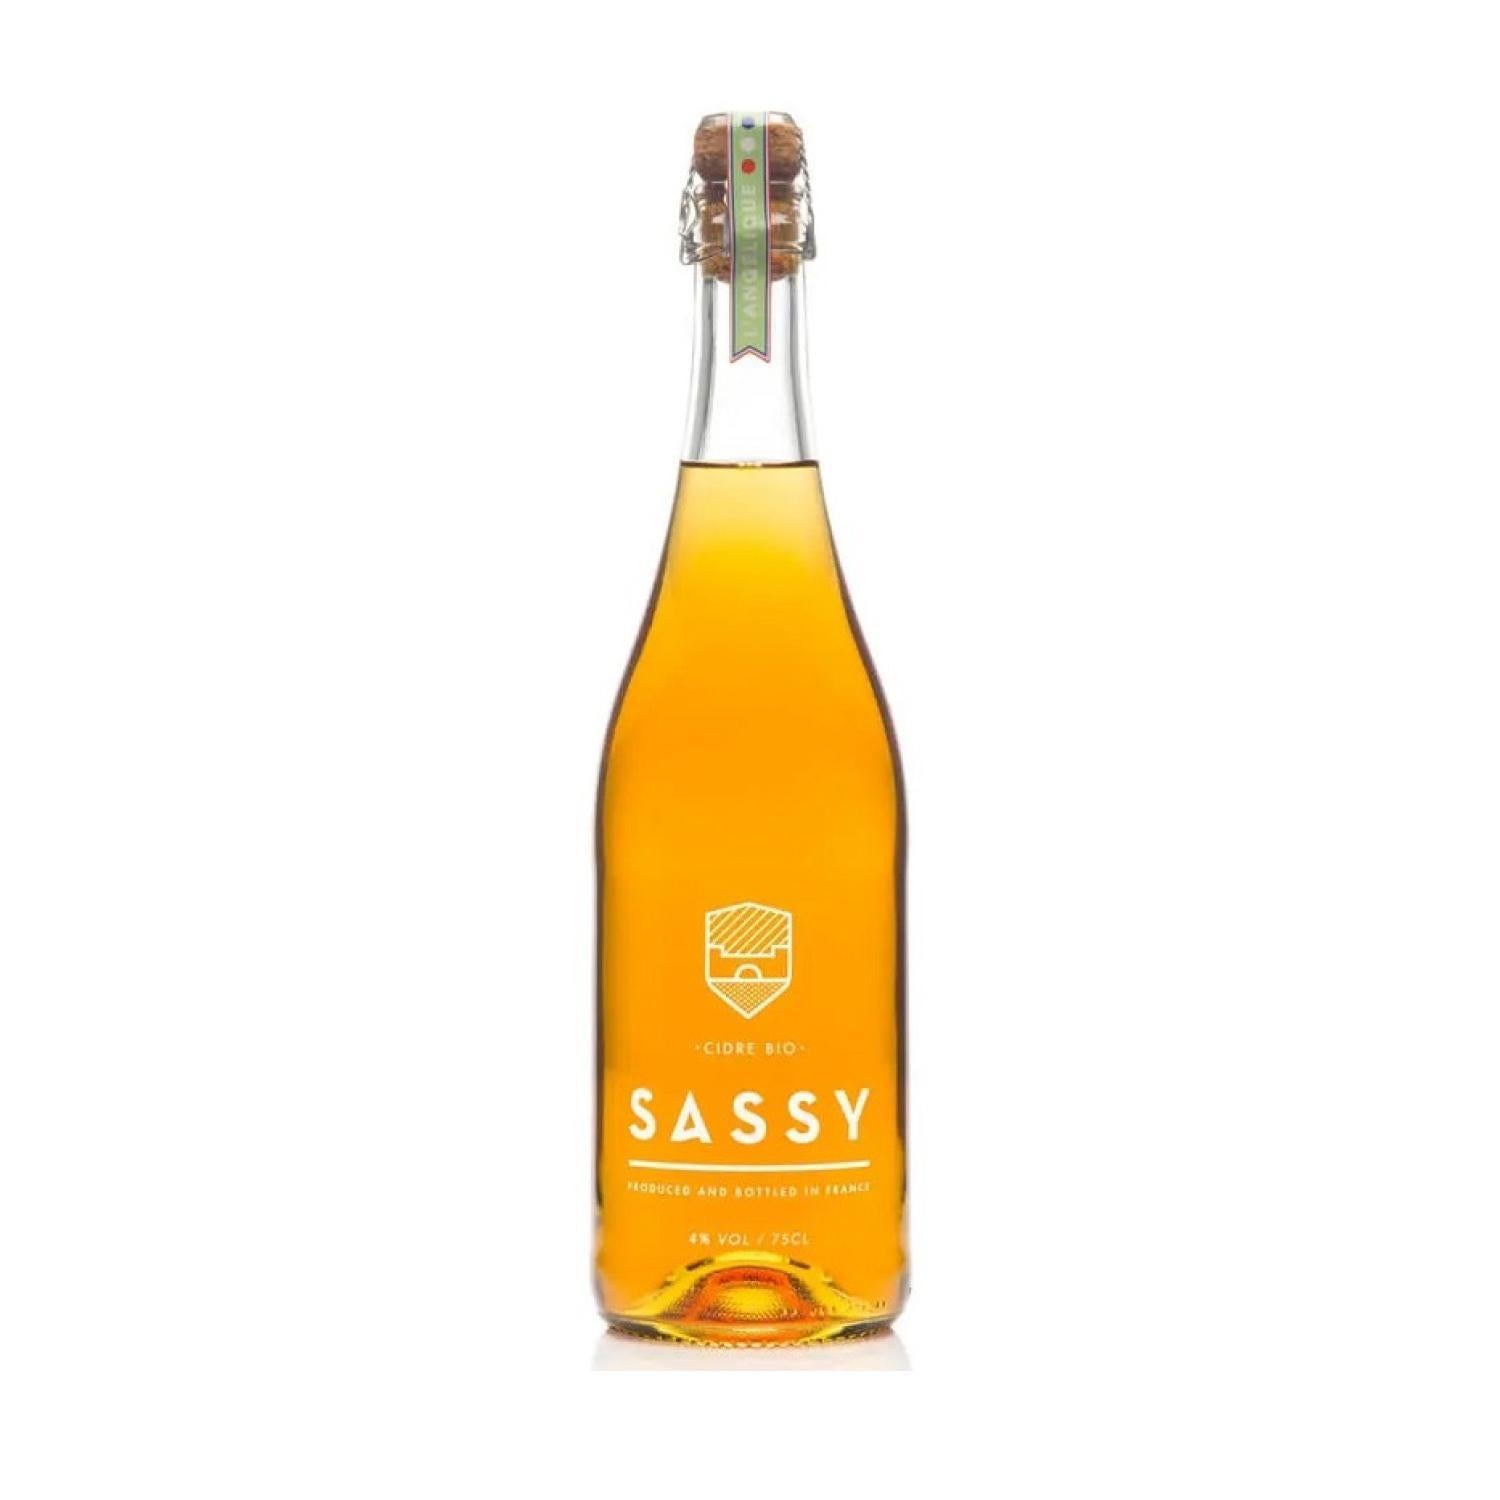 Sassy - L'Angelique Cidre